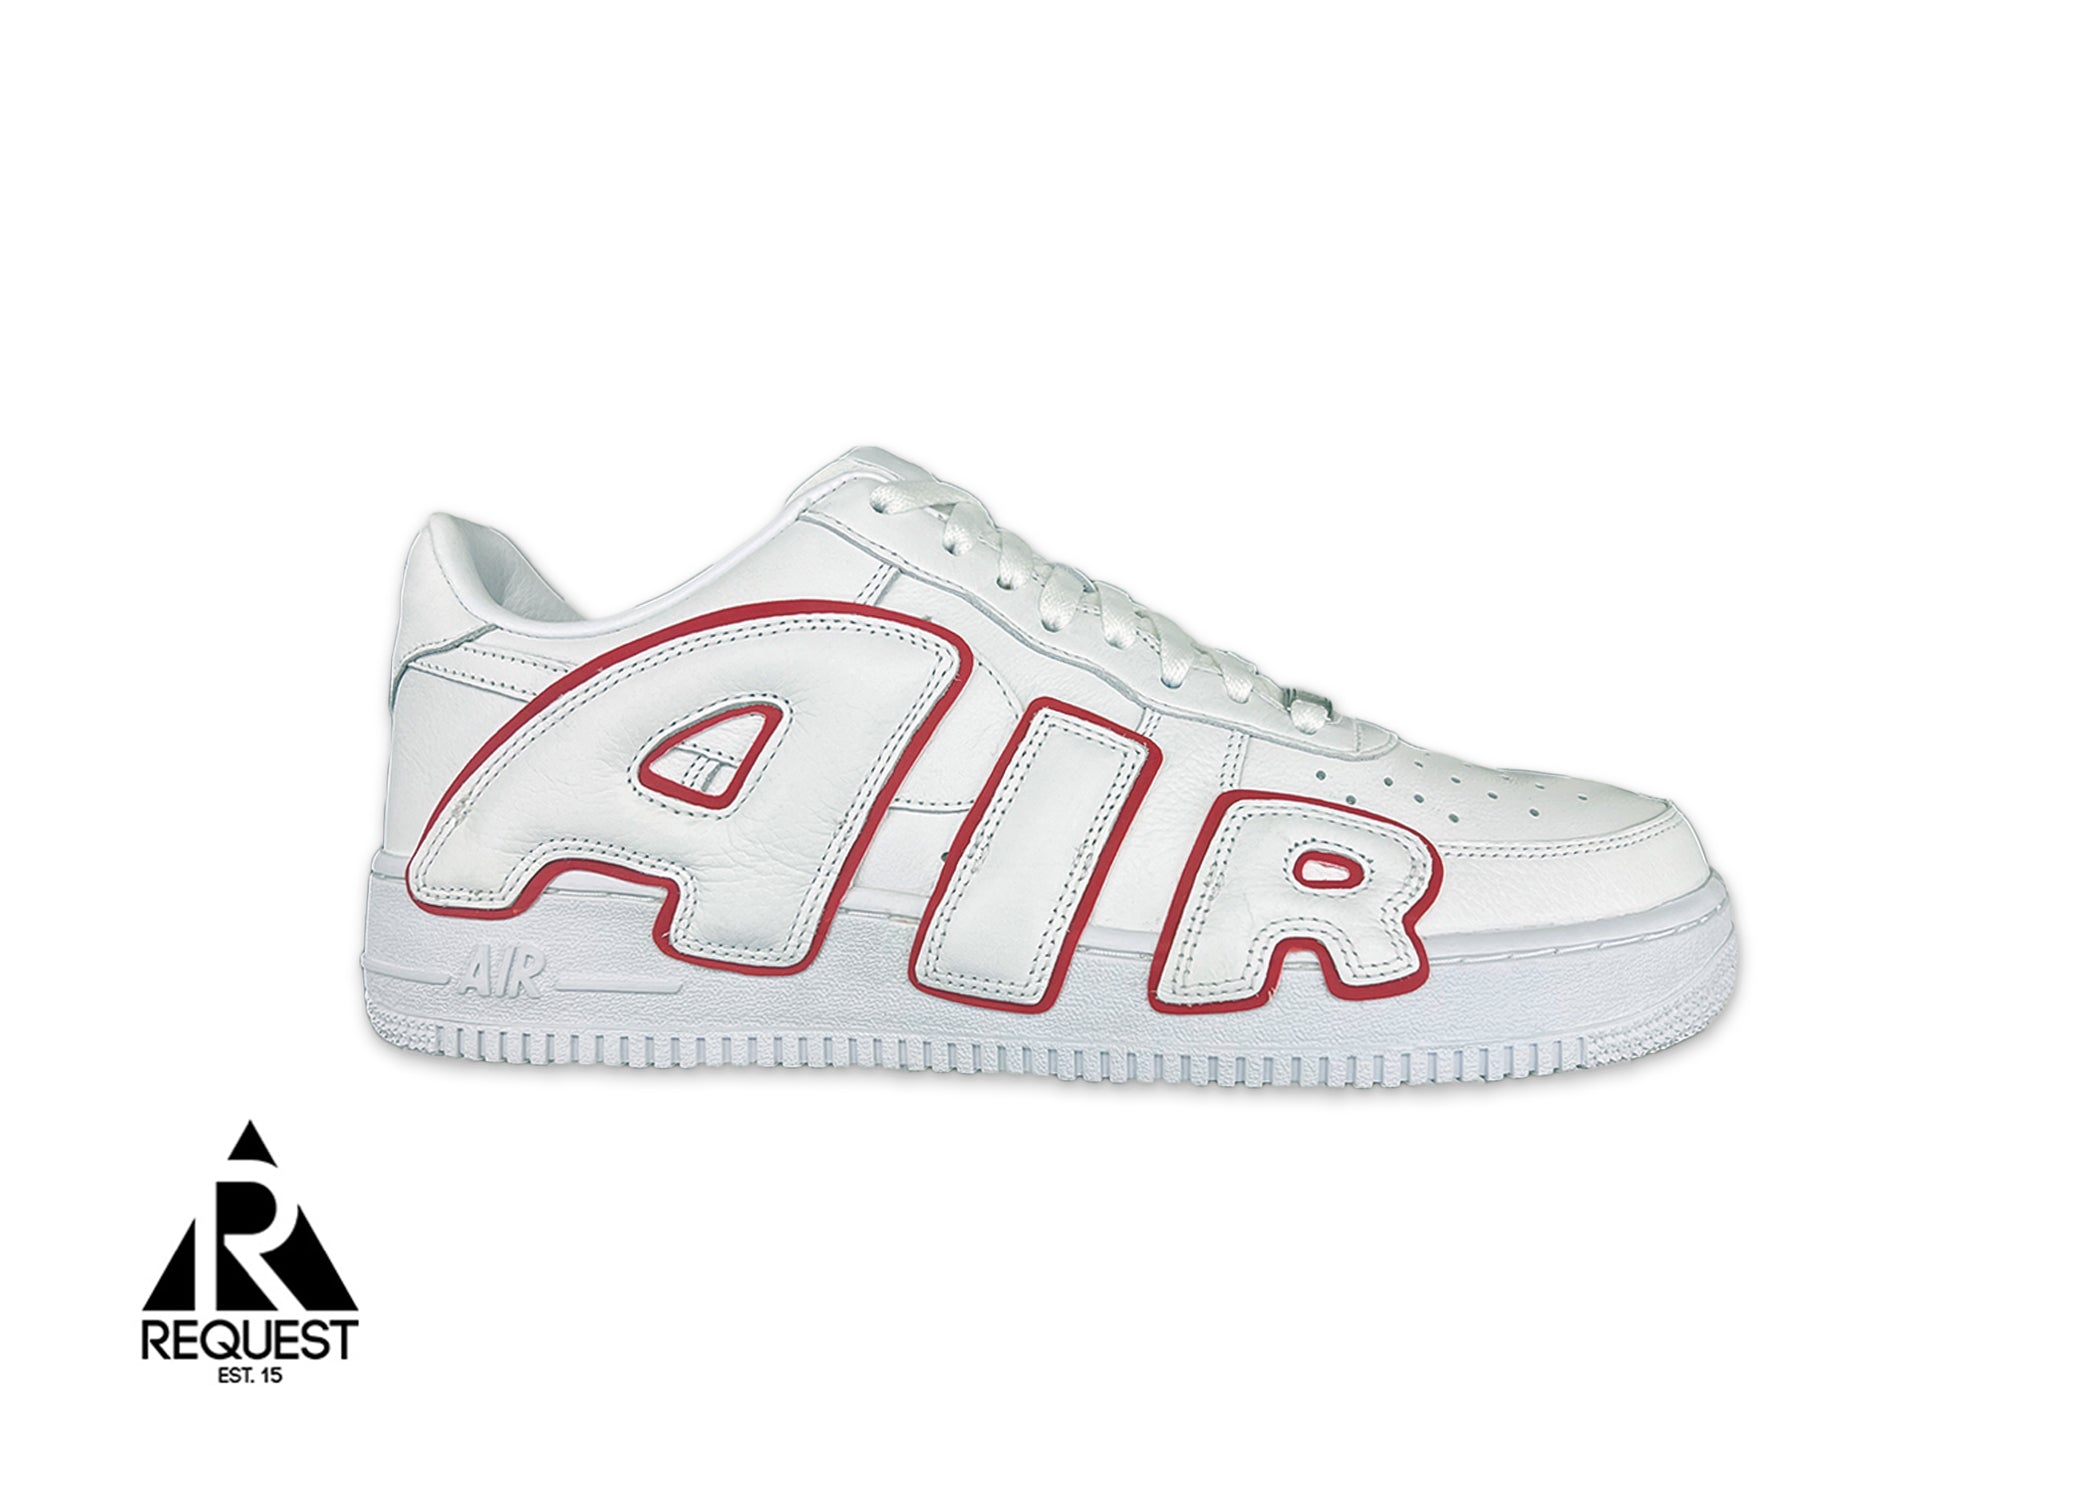 Nike Air Force 1 Cactus Plant Flea Market “Red Air & Blue Sunshine White”